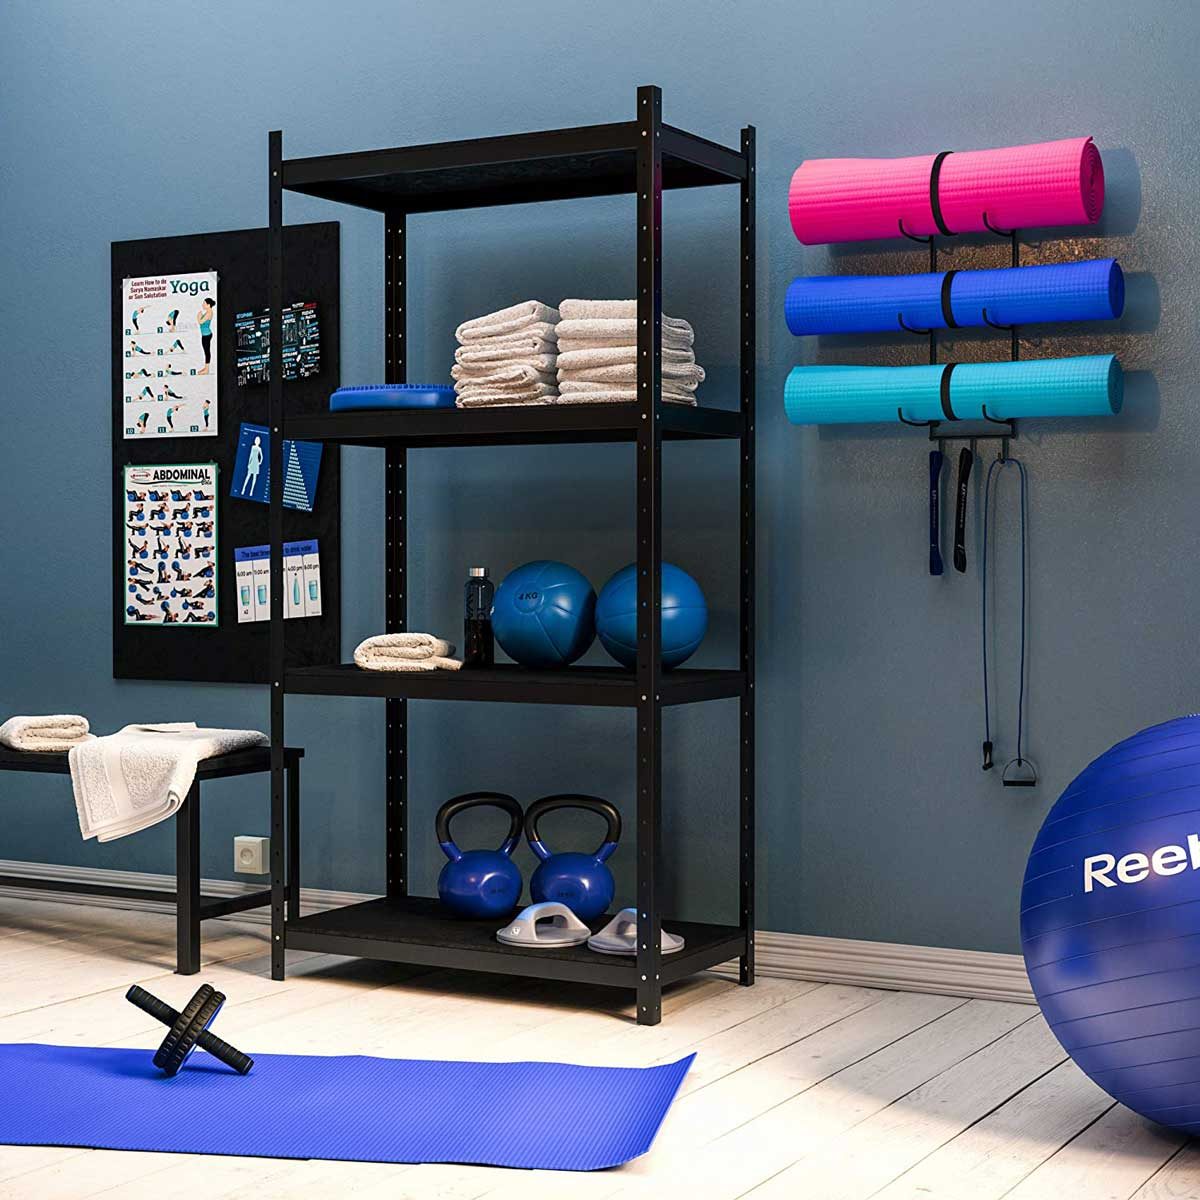 8 Home Gym Storage Ideas